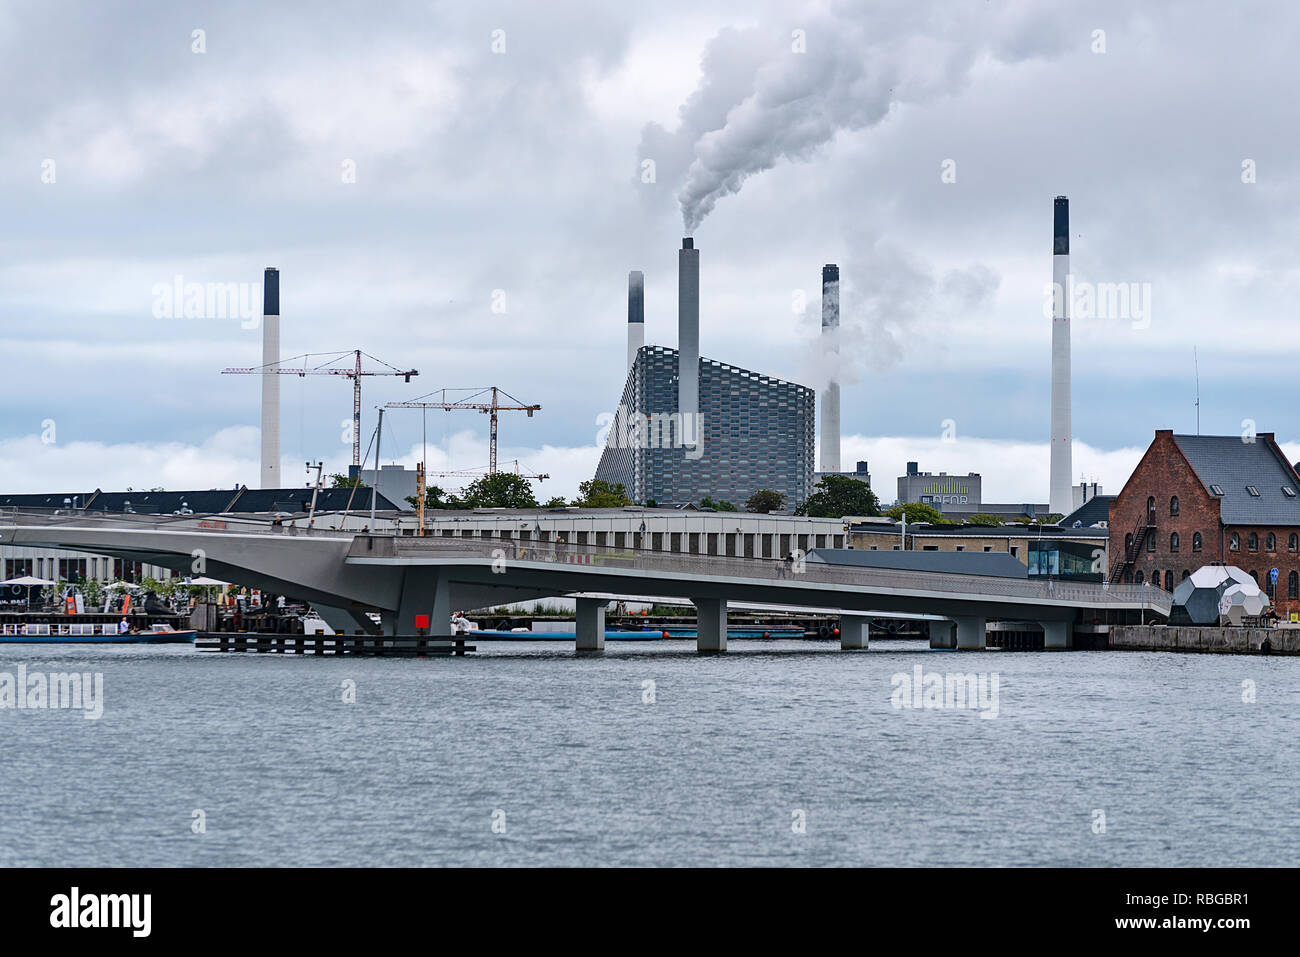 Kopenhagen, Dänemark - 24. Juli 2017: Neue umweltfreundliche power station Amager Bakke (Amager Hill) in Kopenhagen. Stockfoto